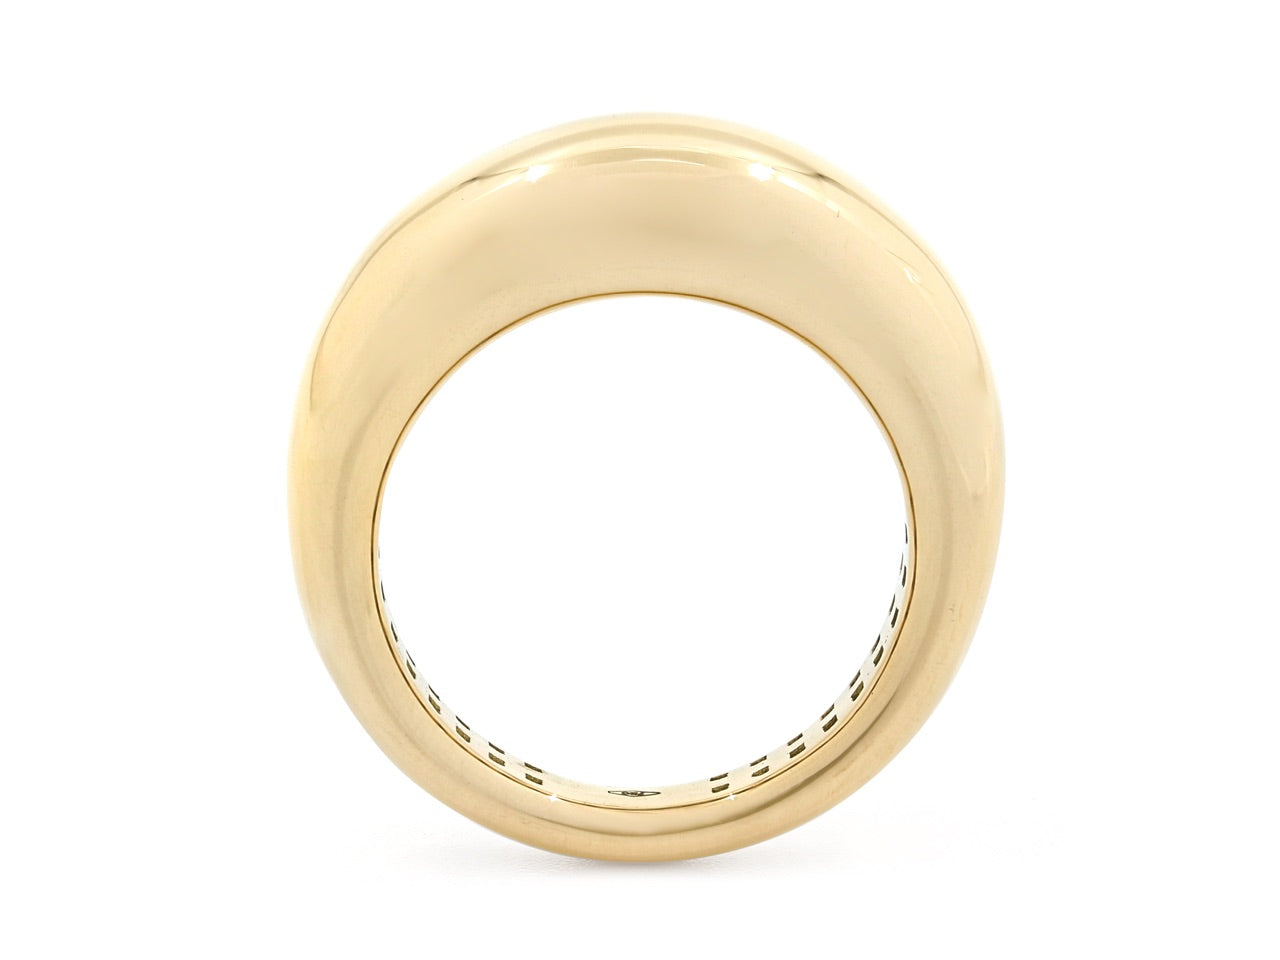 Bombé Gold Ring in 18K, by Beladora